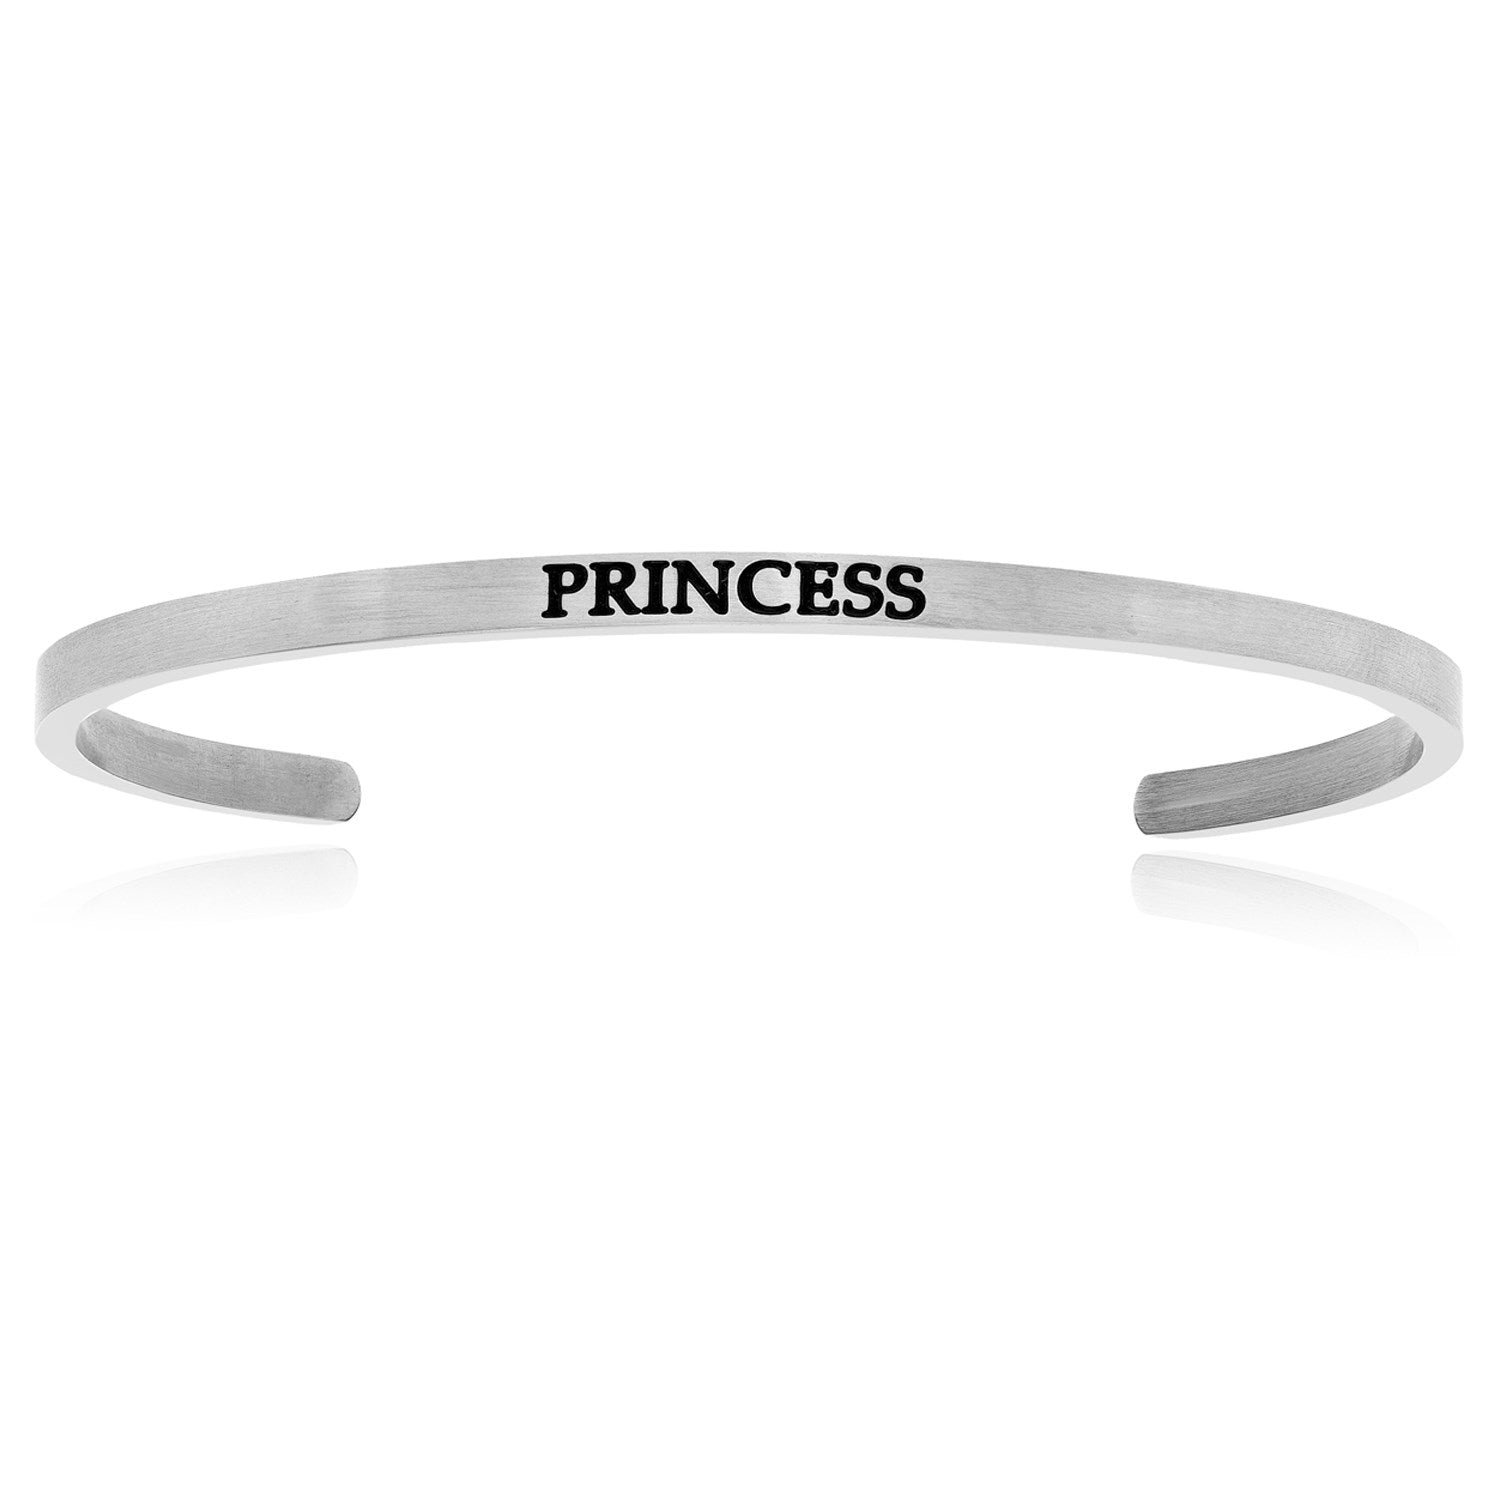 Stainless Steel Princess Cuff Bracelet